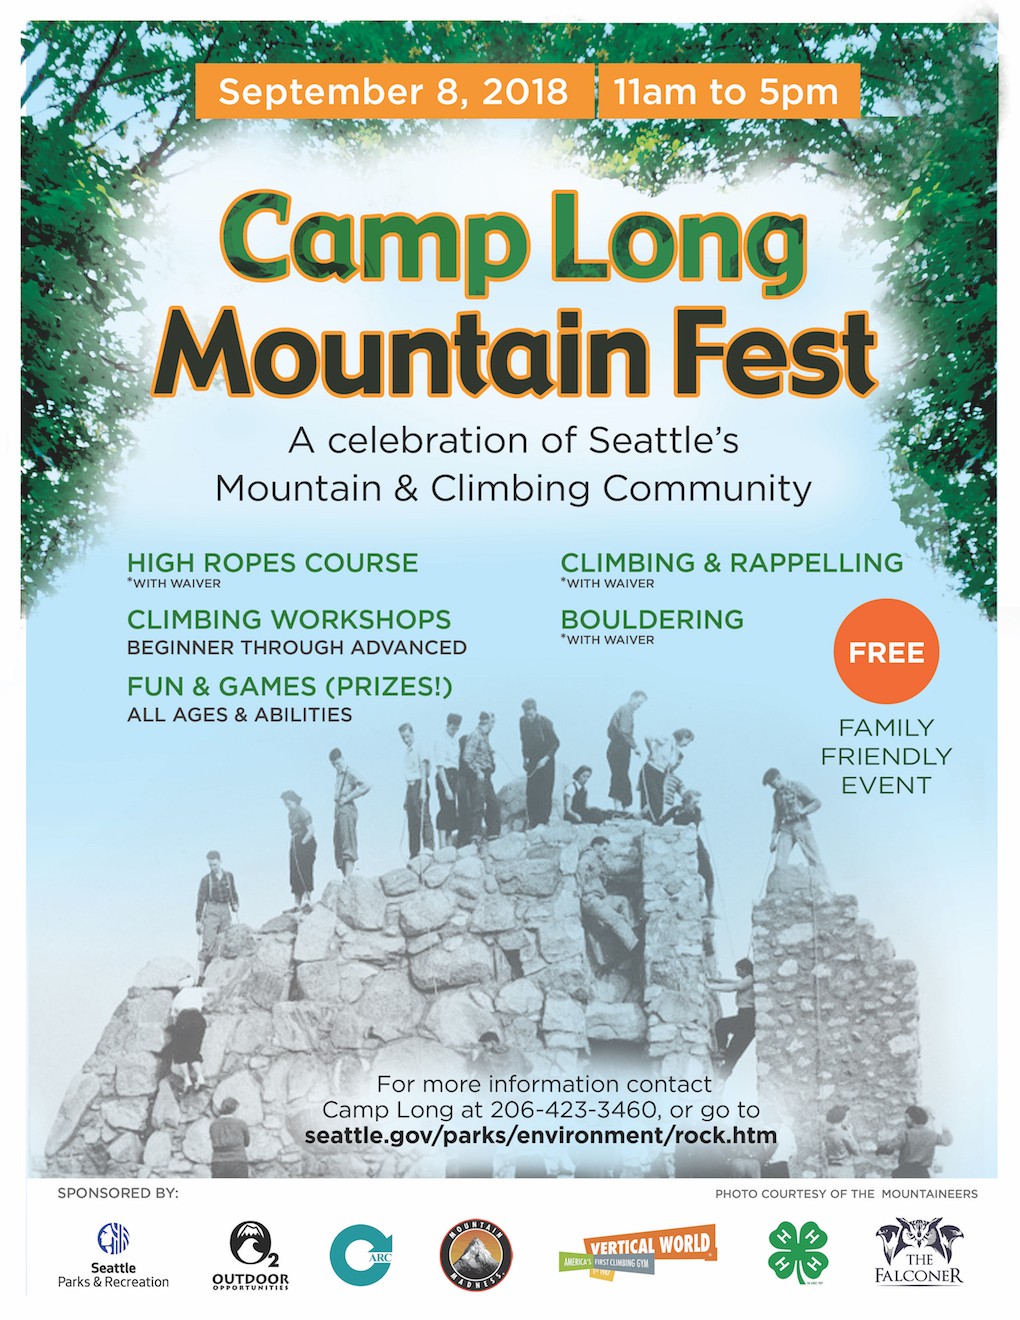 Camp Long Mountain Fest